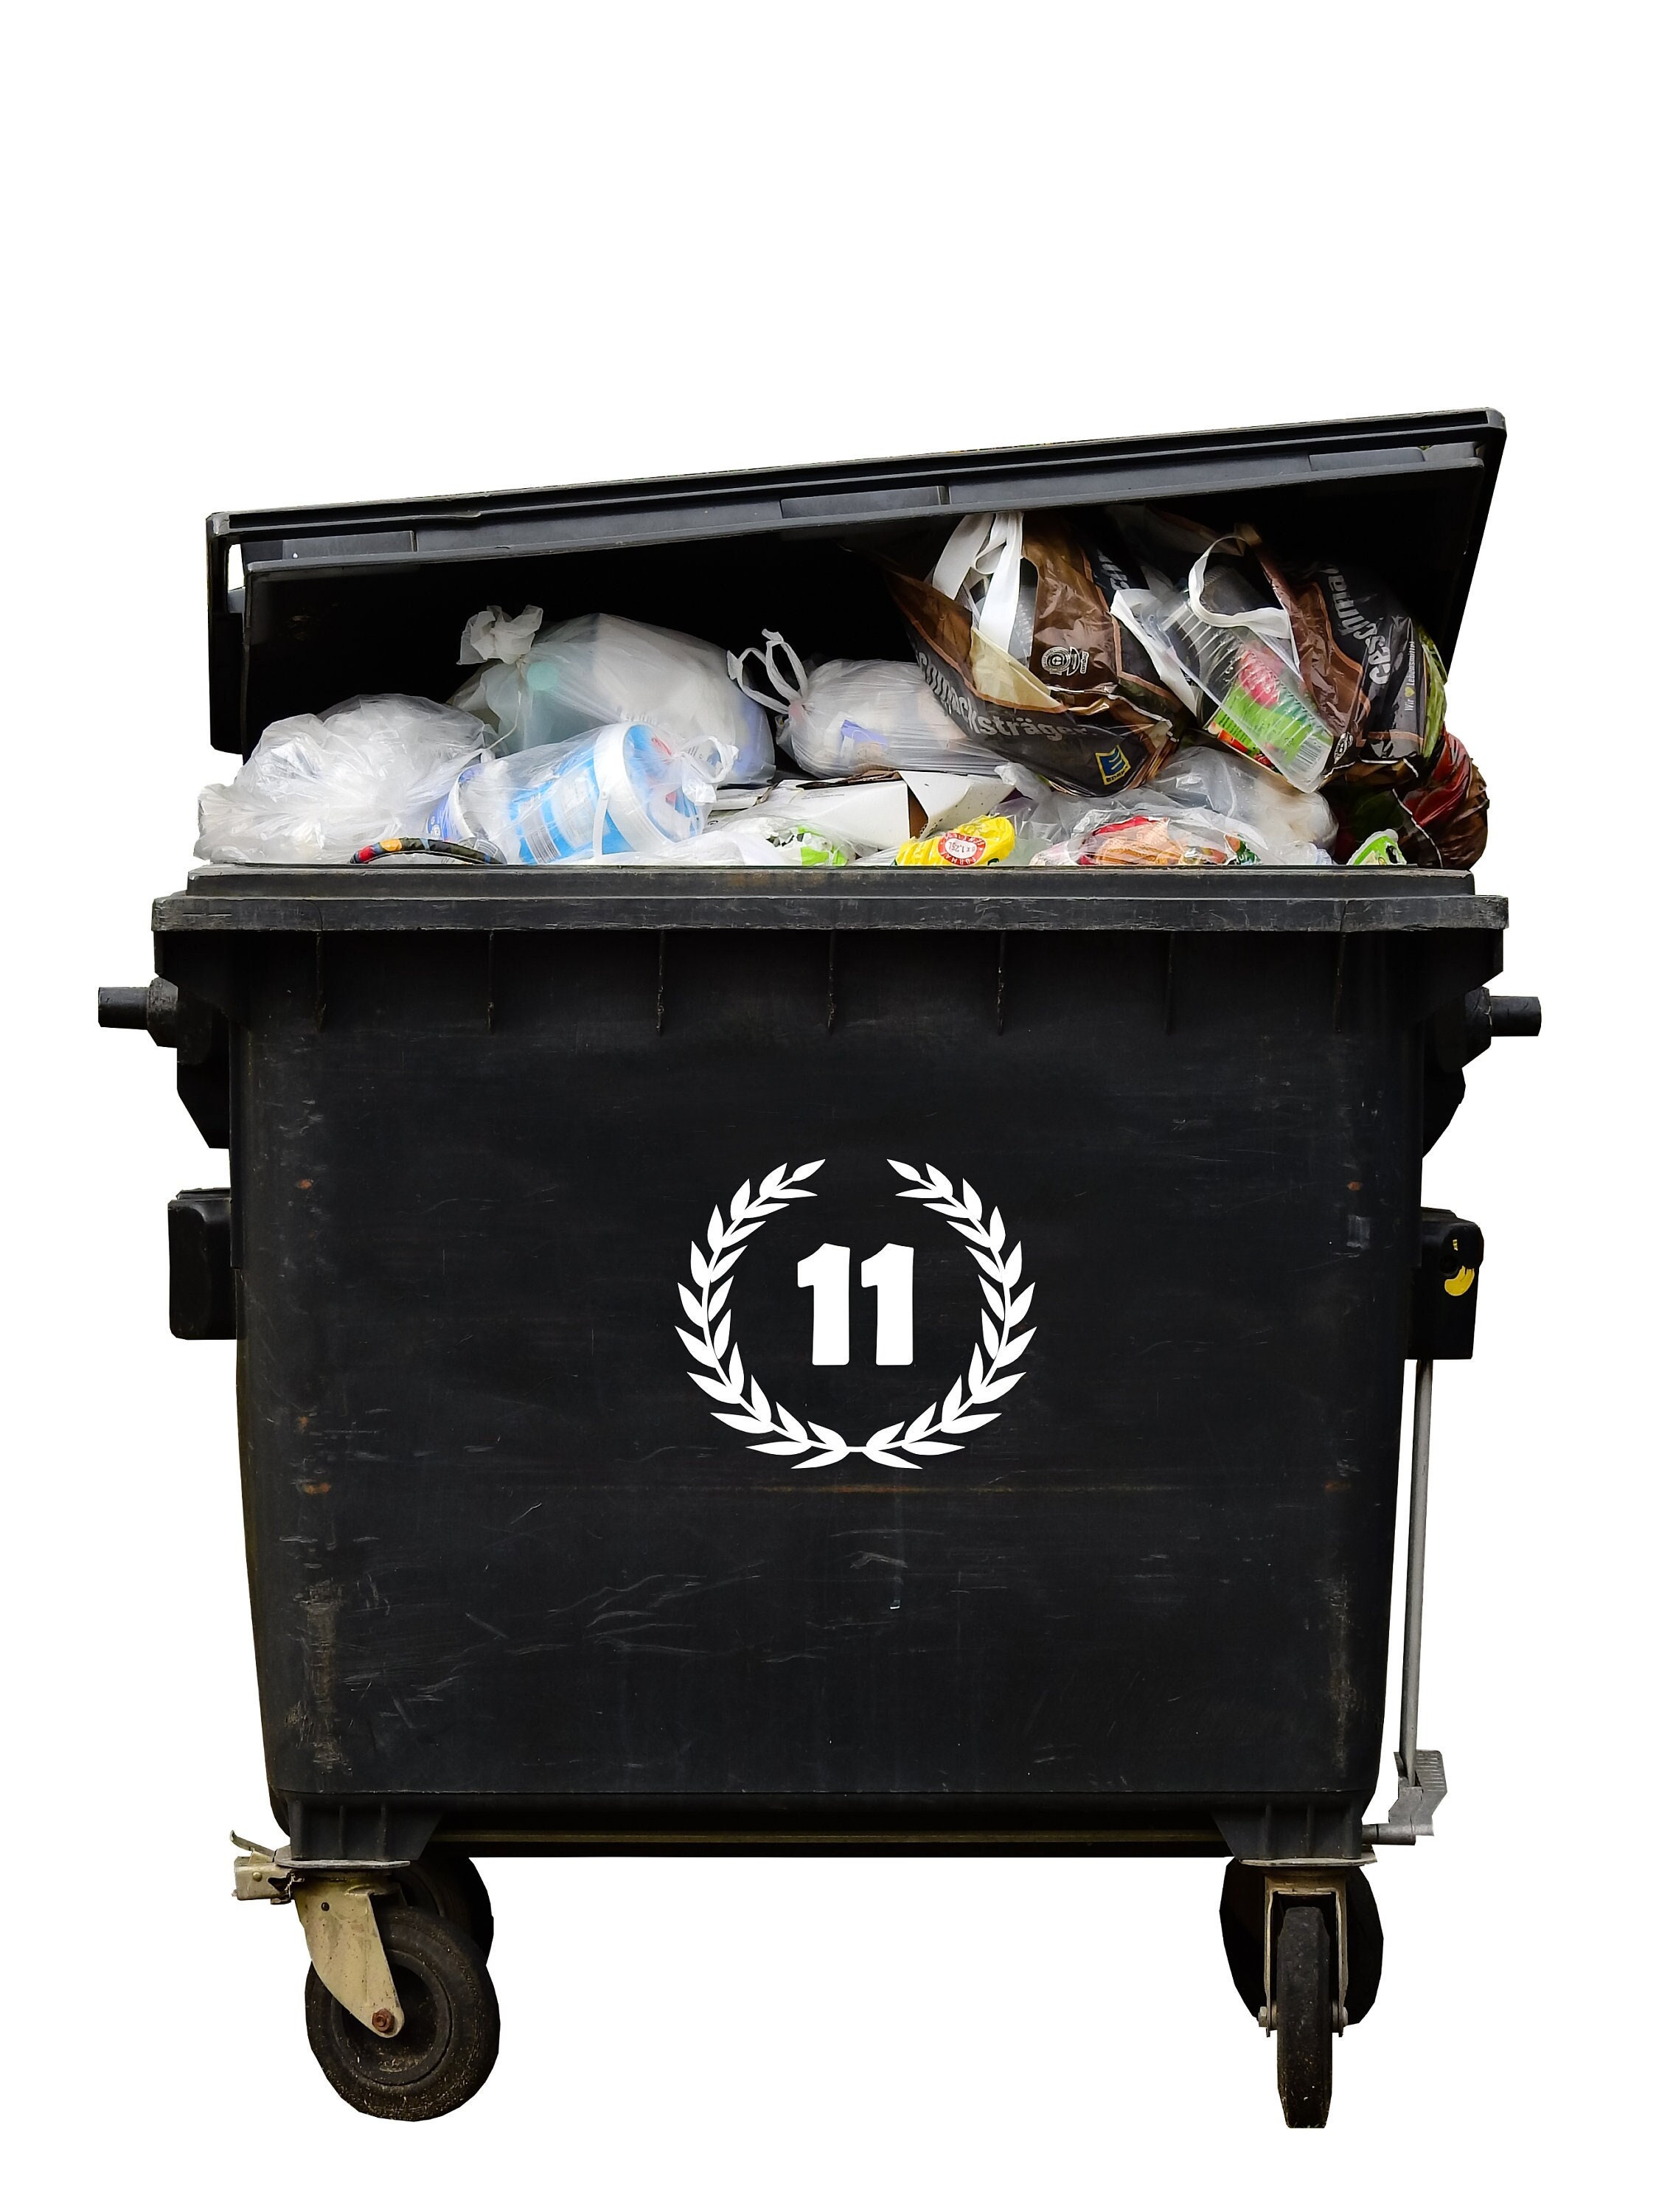 Mülltonne Mülleimer Aufkleber Adresse Nachname Mülleimer Recycle